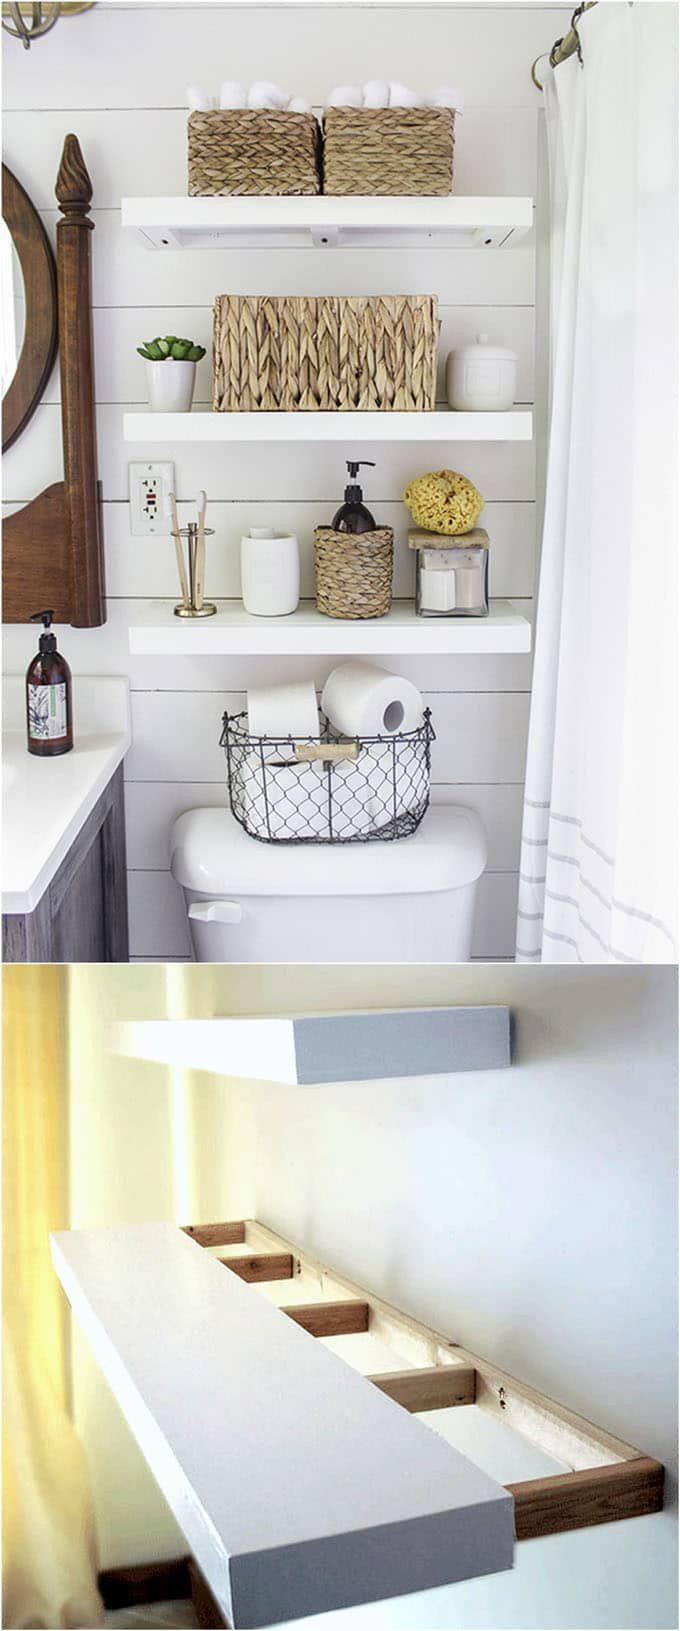 Small Bathroom Wall Shelf
 16 Easy and Stylish DIY Floating Shelves & Wall Shelves